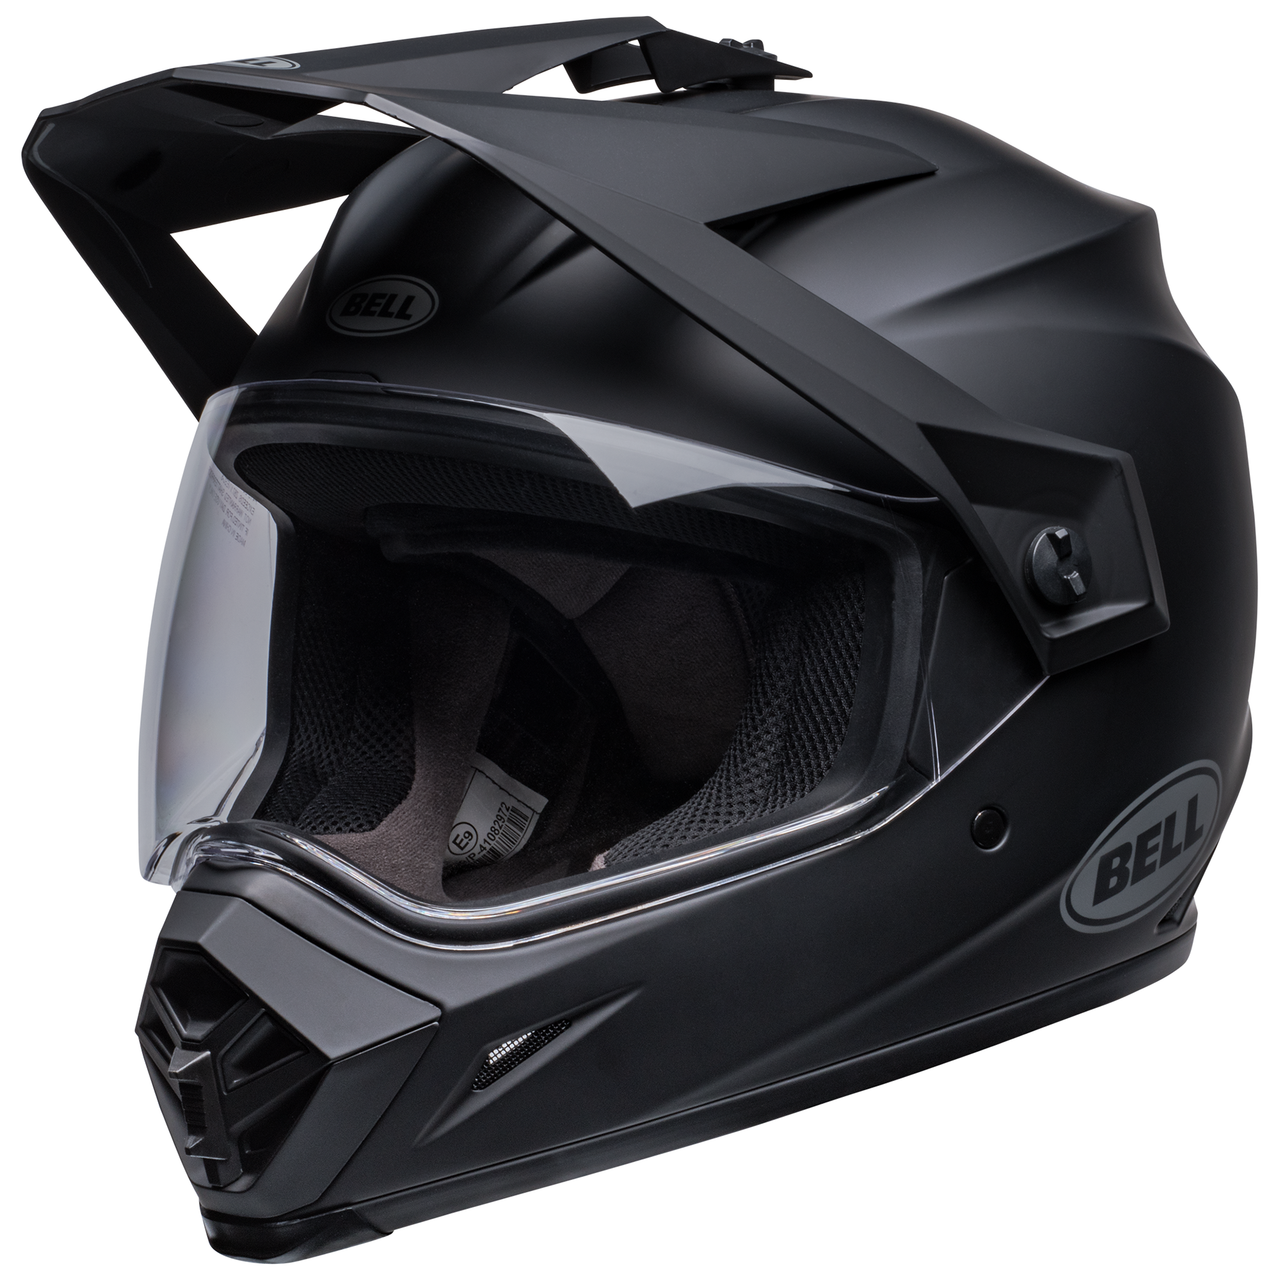 Bell MX-9 Adventure Mips Helmet Matte Black - Clear Visor